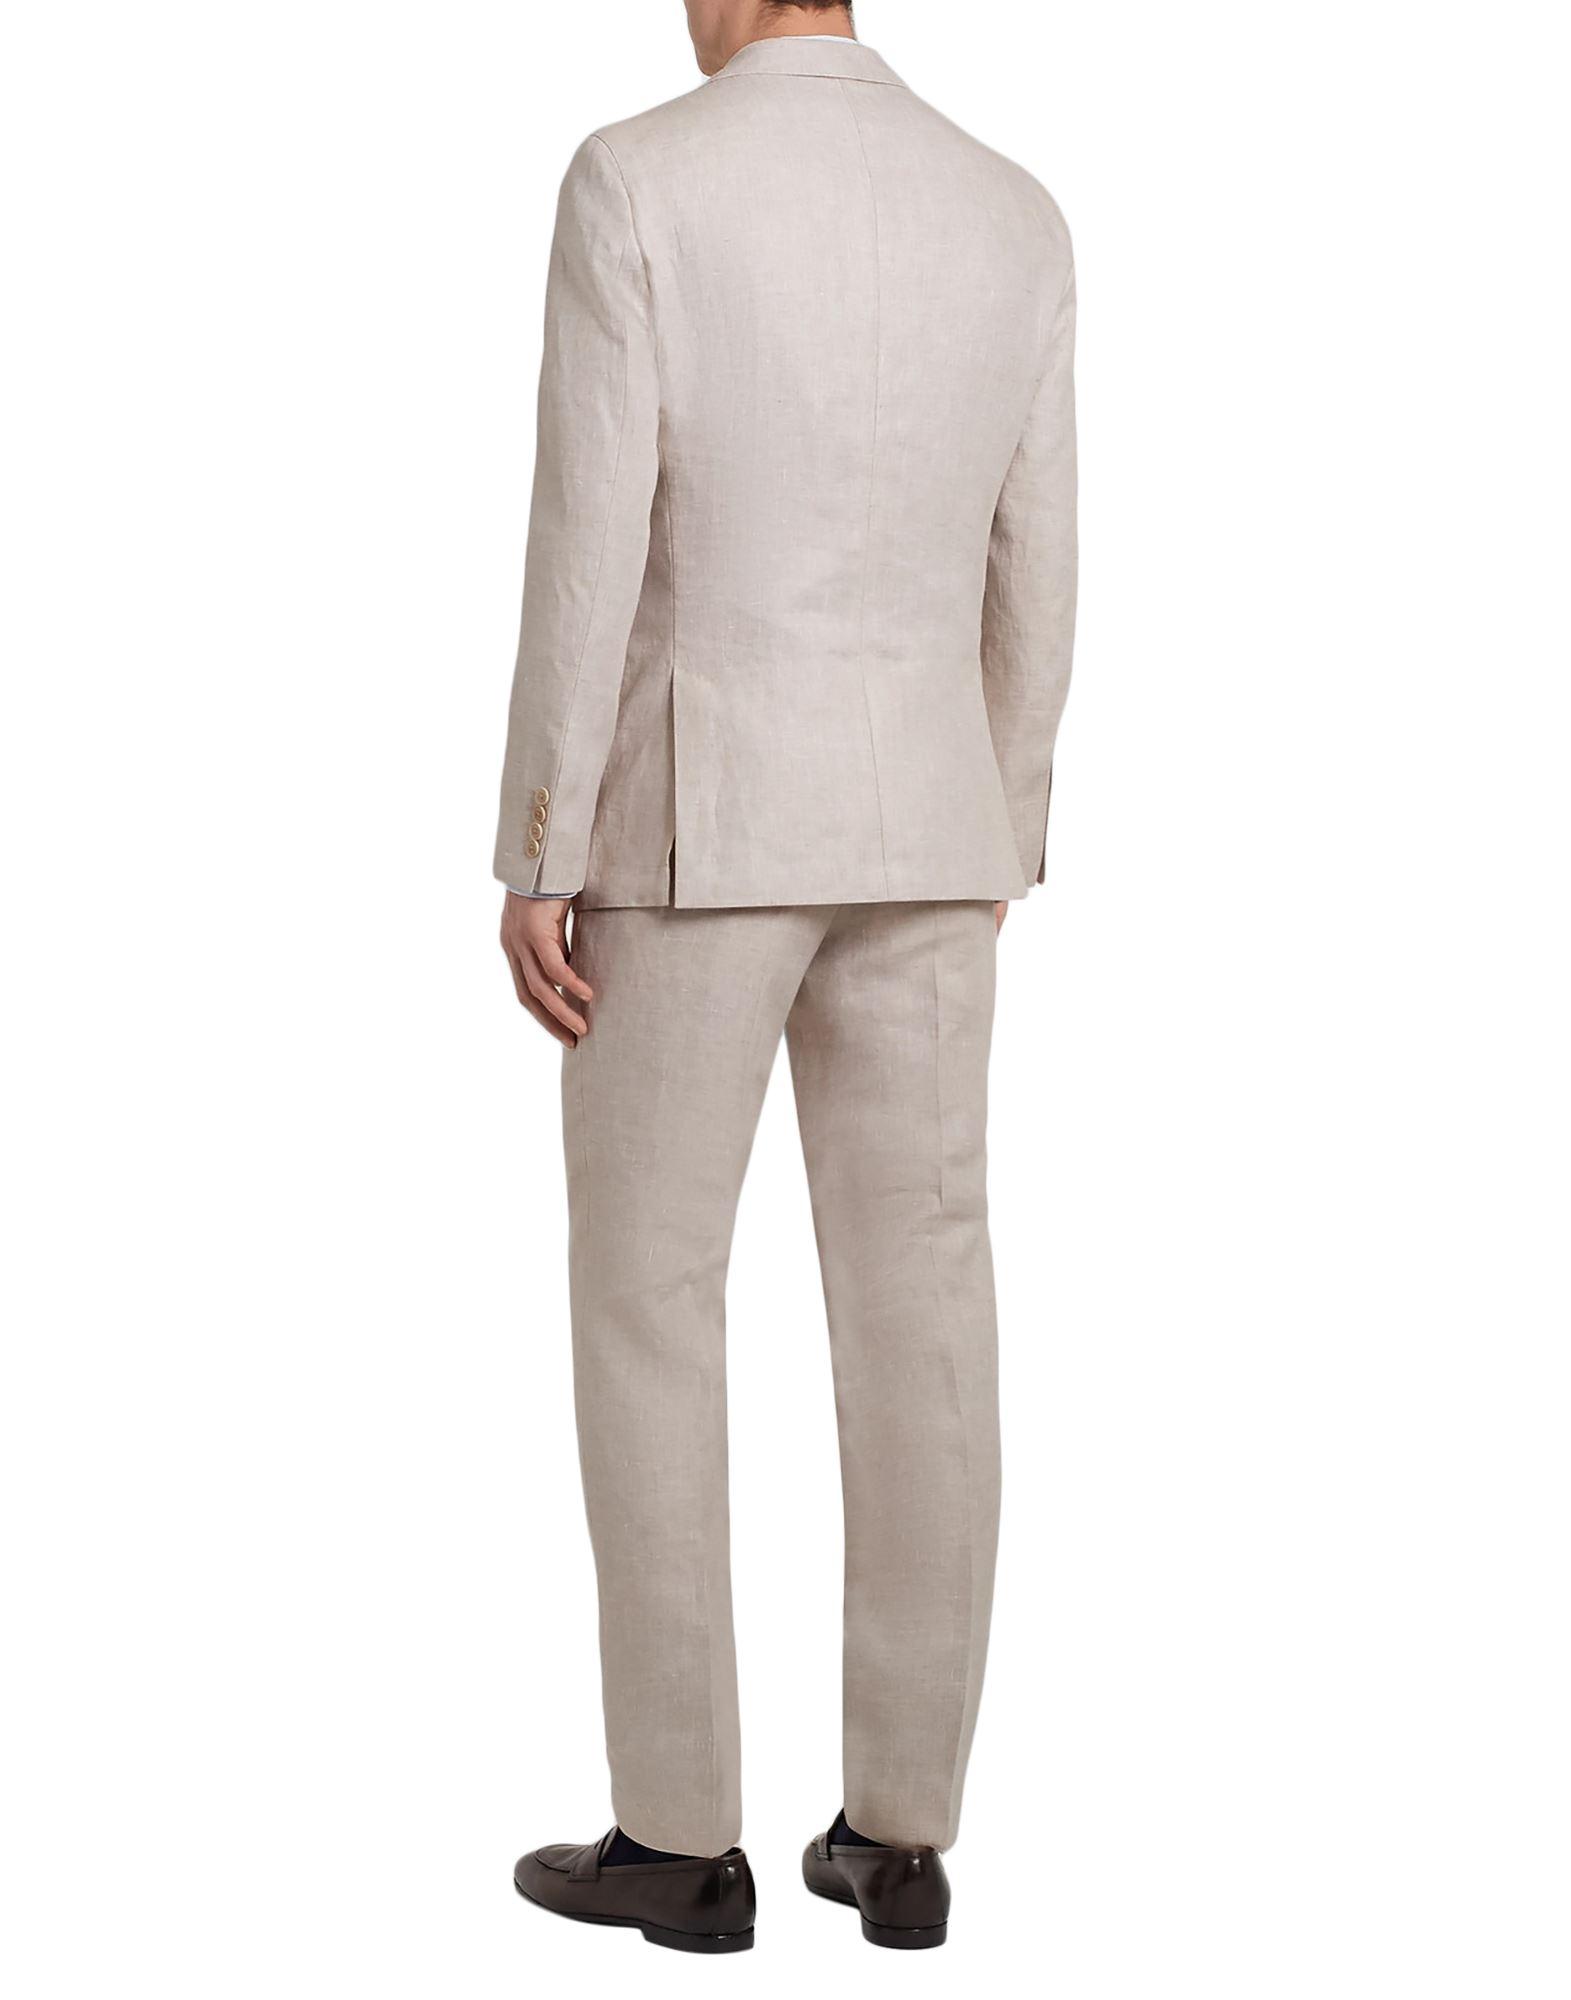 BOSS by HUGO BOSS Linen Suit in Beige (Natural) for Men | Lyst